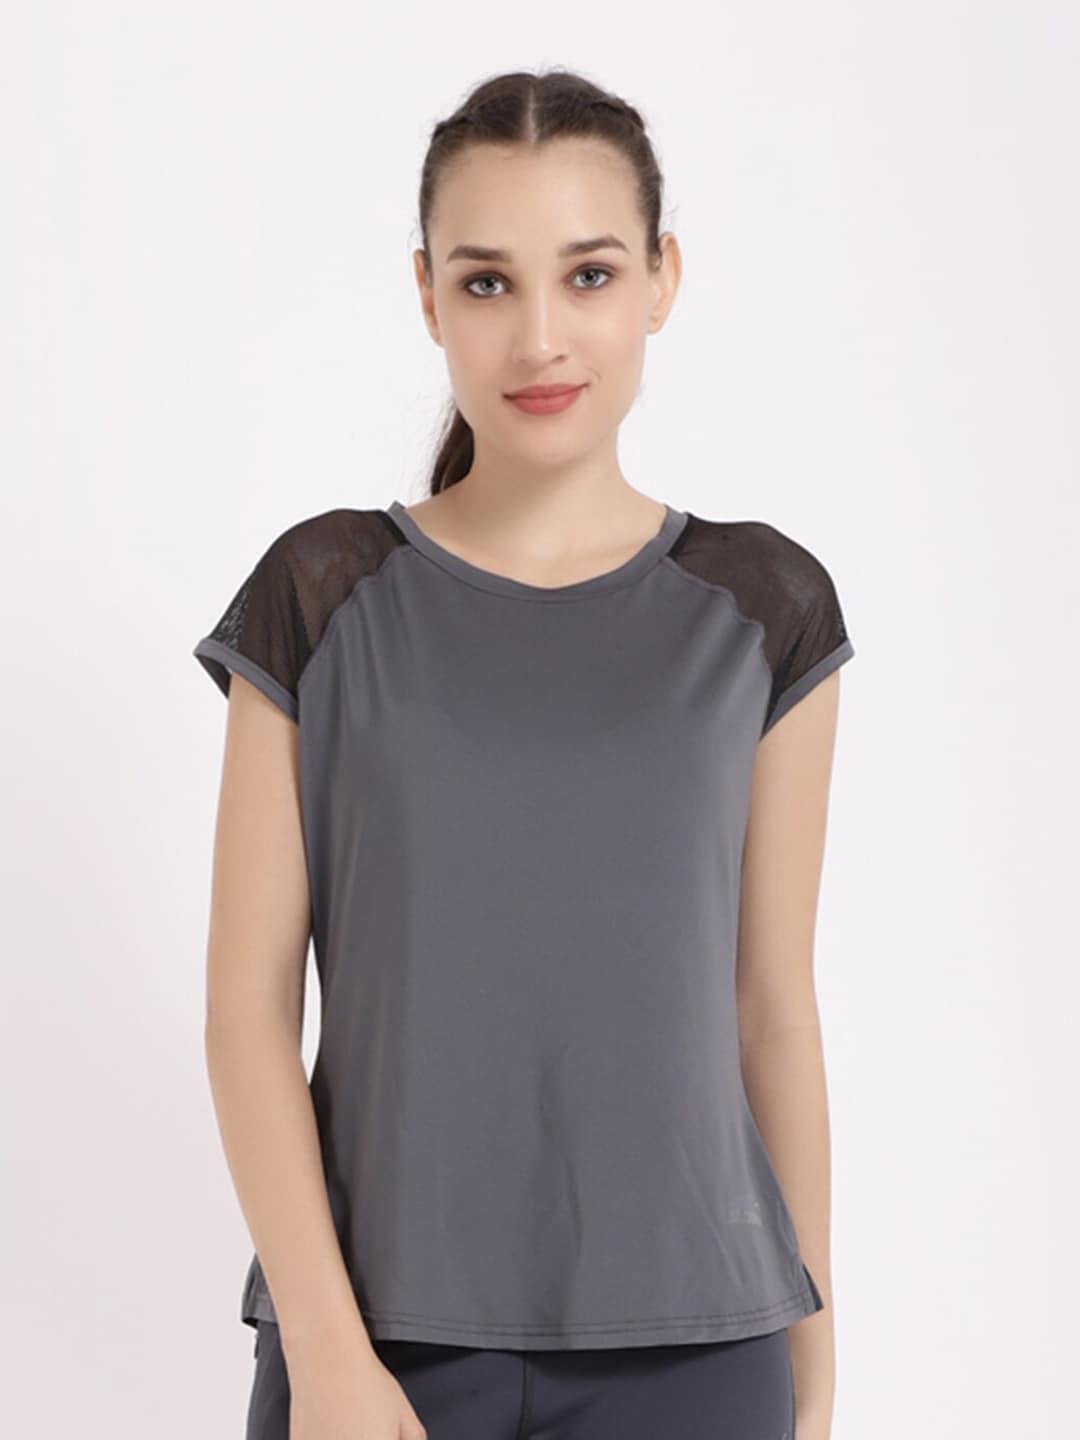 studioactiv-women-grey-extended-sleeves-t-shirt